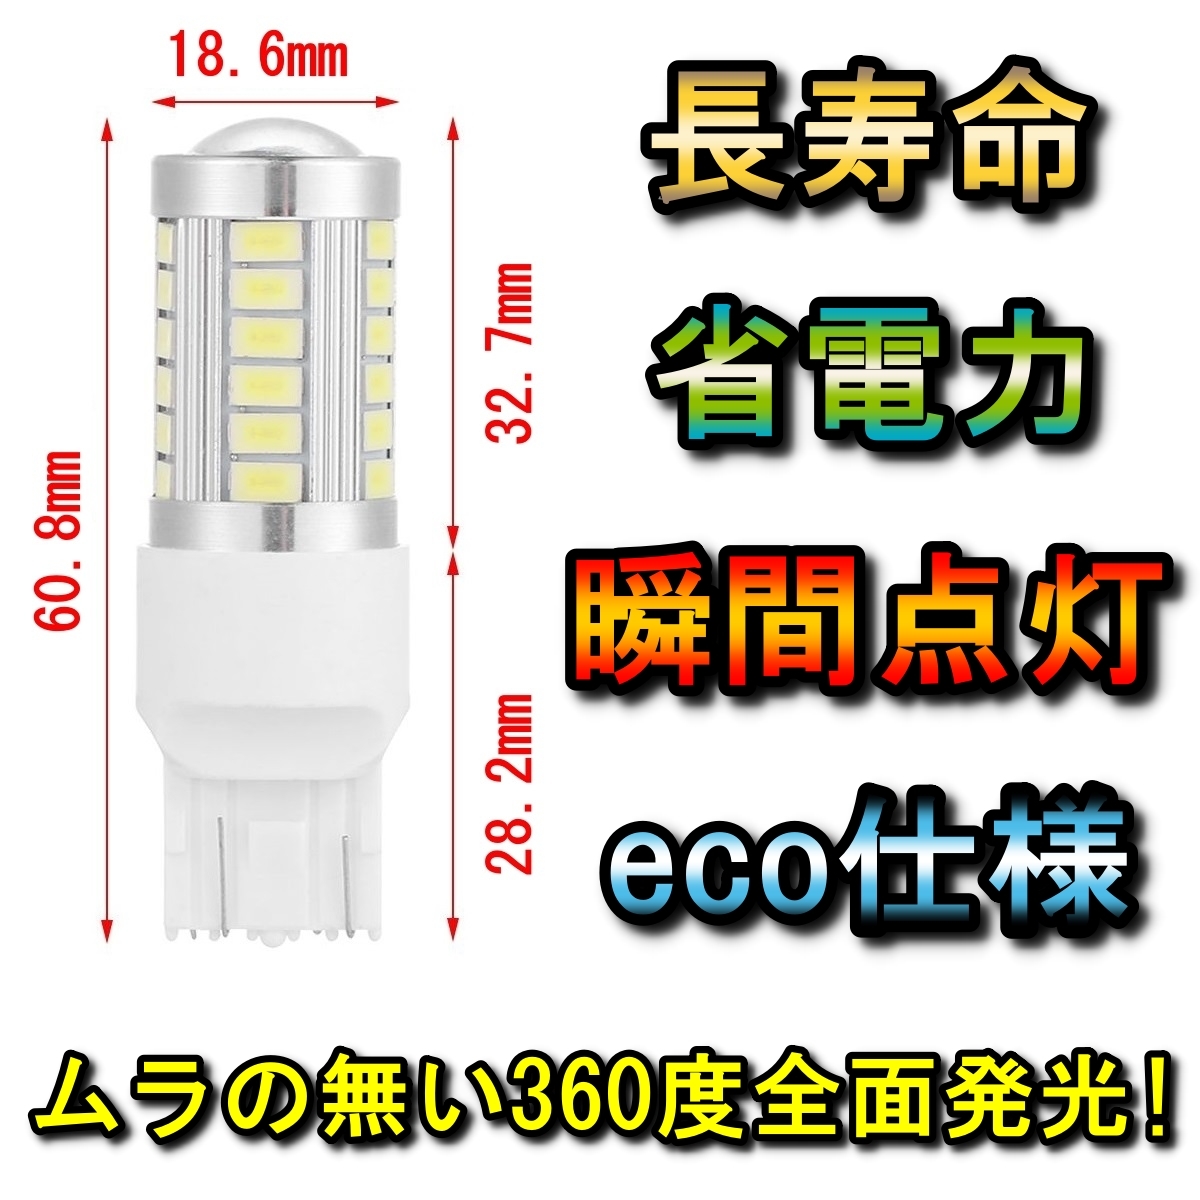  тормоз лампа T20 двойная лампа LED задний фонарь стоп-сигнал Gemini MJ4*5*6 H9.2~H9.2 Isuzu красный 2 шт. комплект 